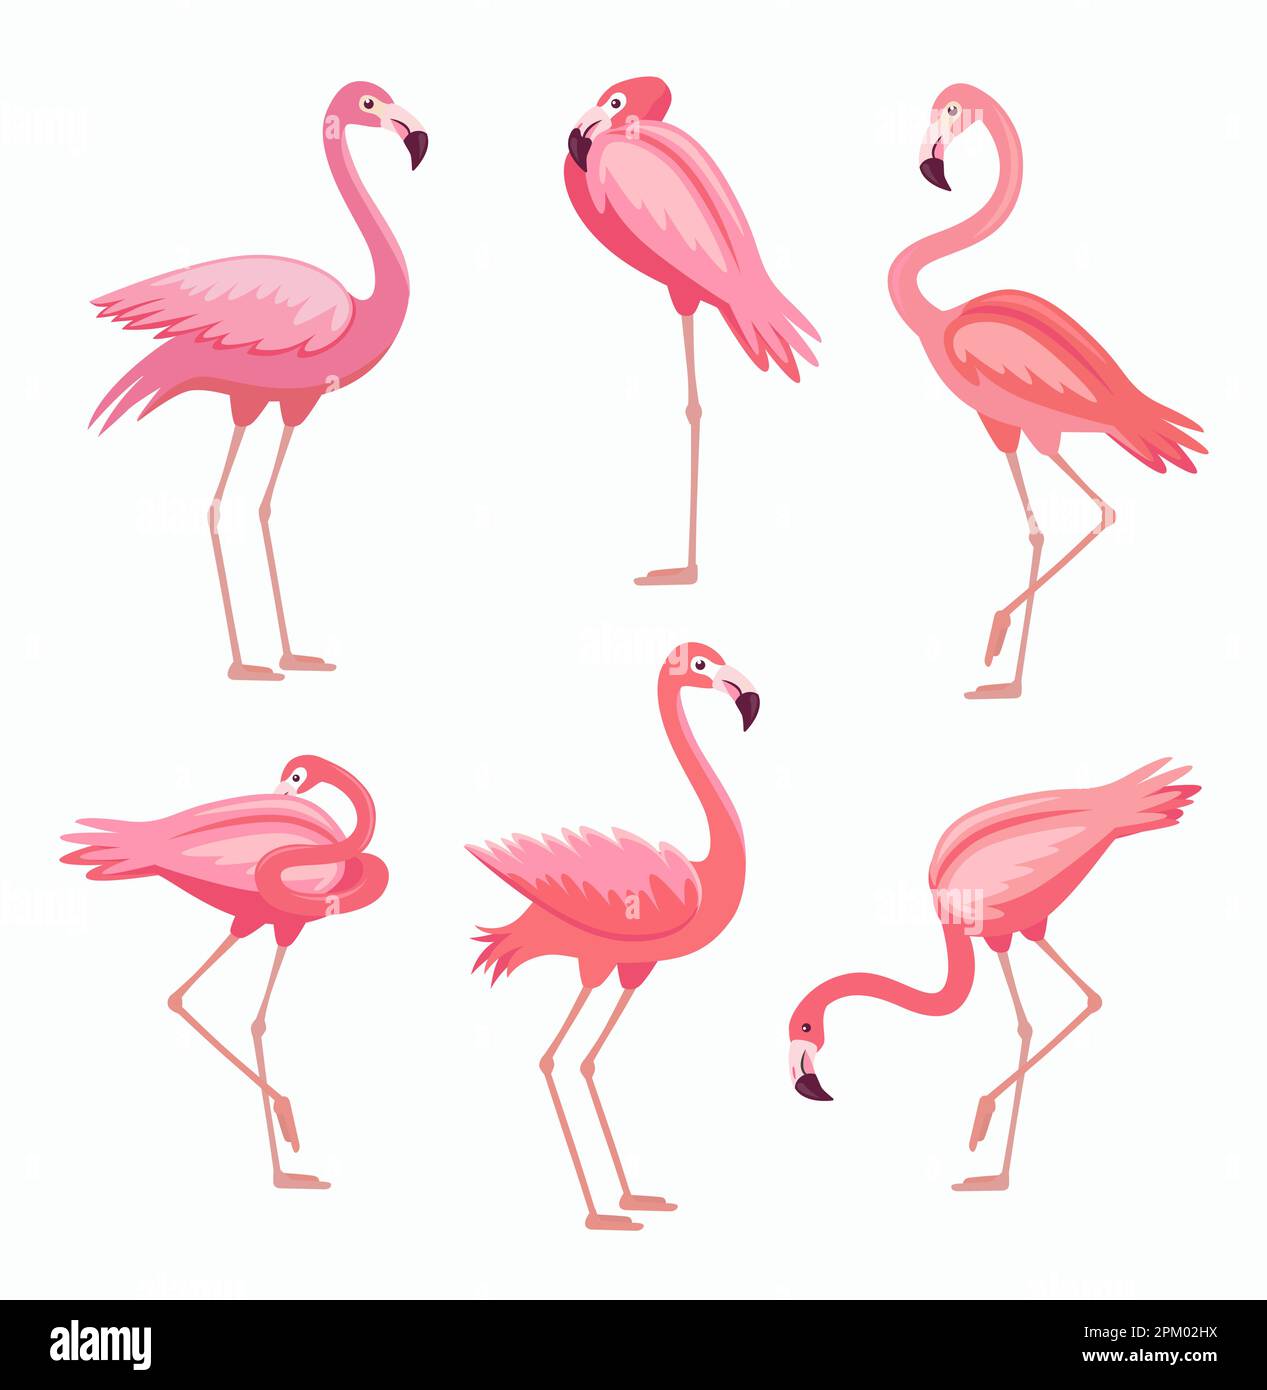 Flamingo in different poses cartoon illustration set Stock Vector Image ...